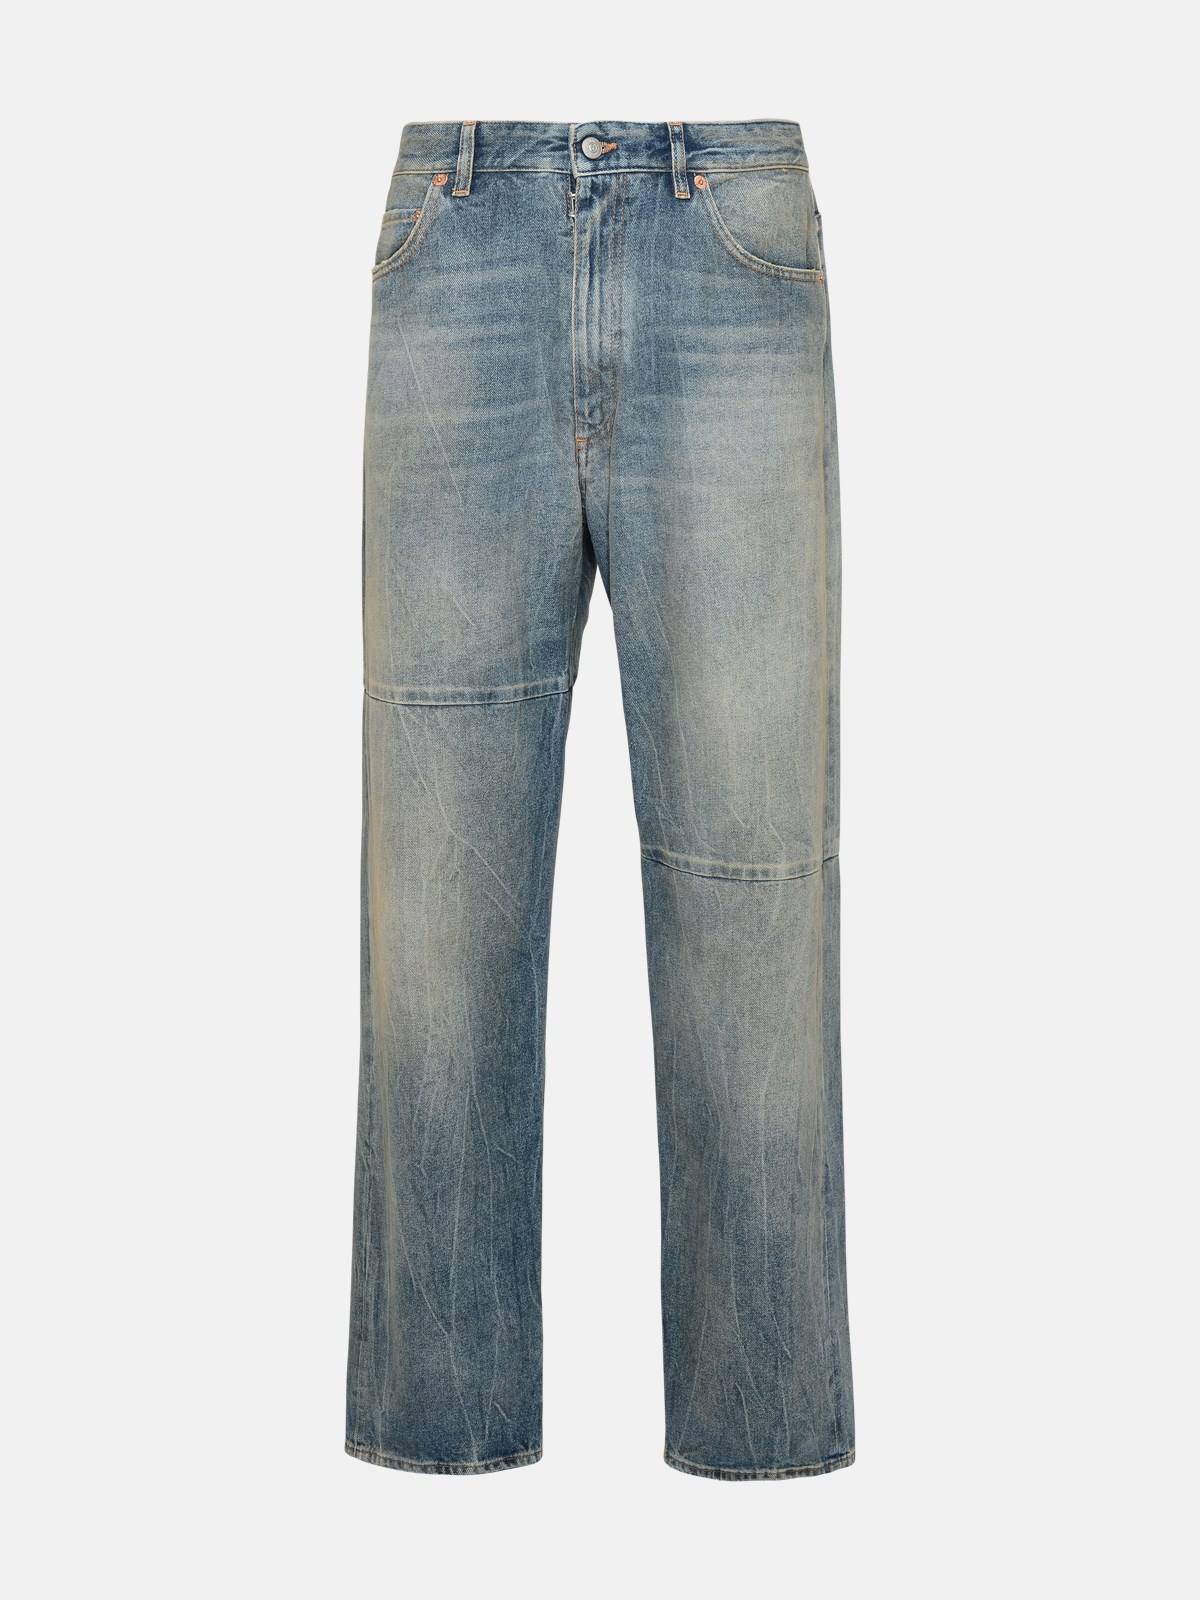 Mm6 Margiela Light Blue Cotton Jeans | ModeSens